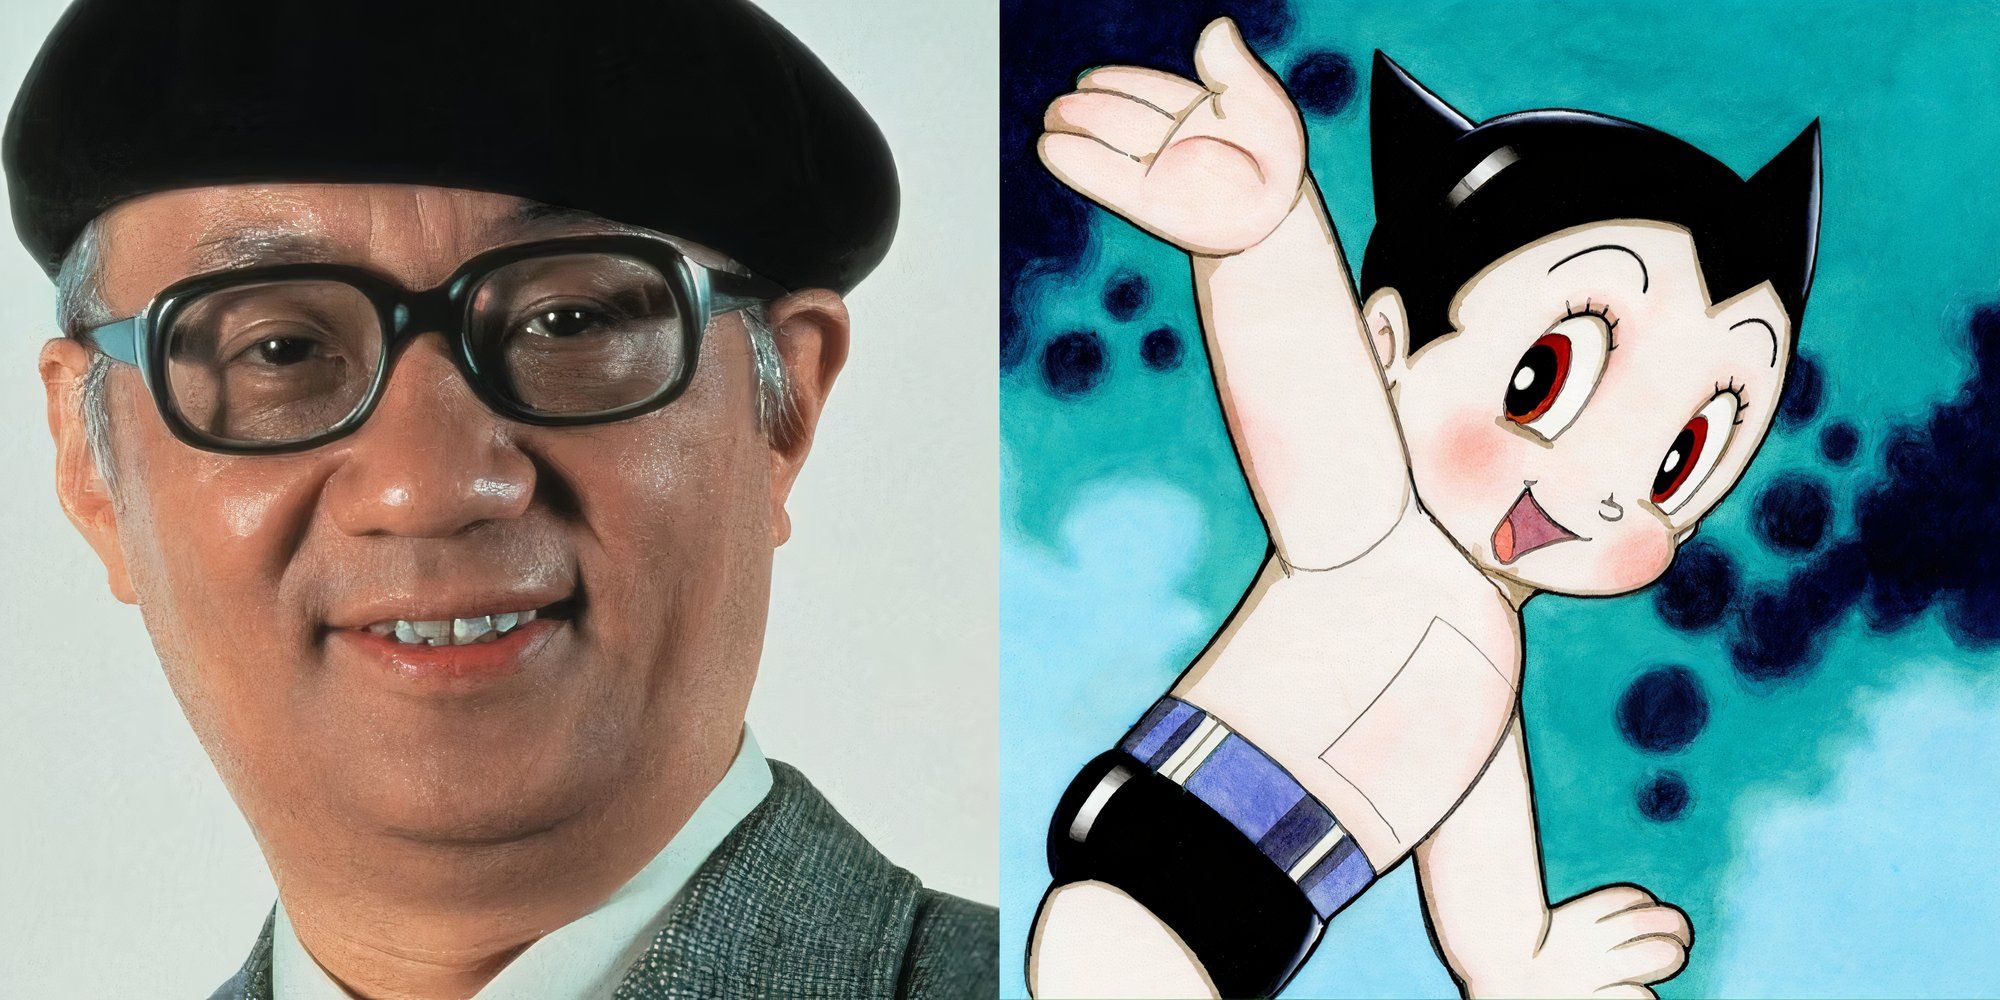 Osamu Tezuka astro boy